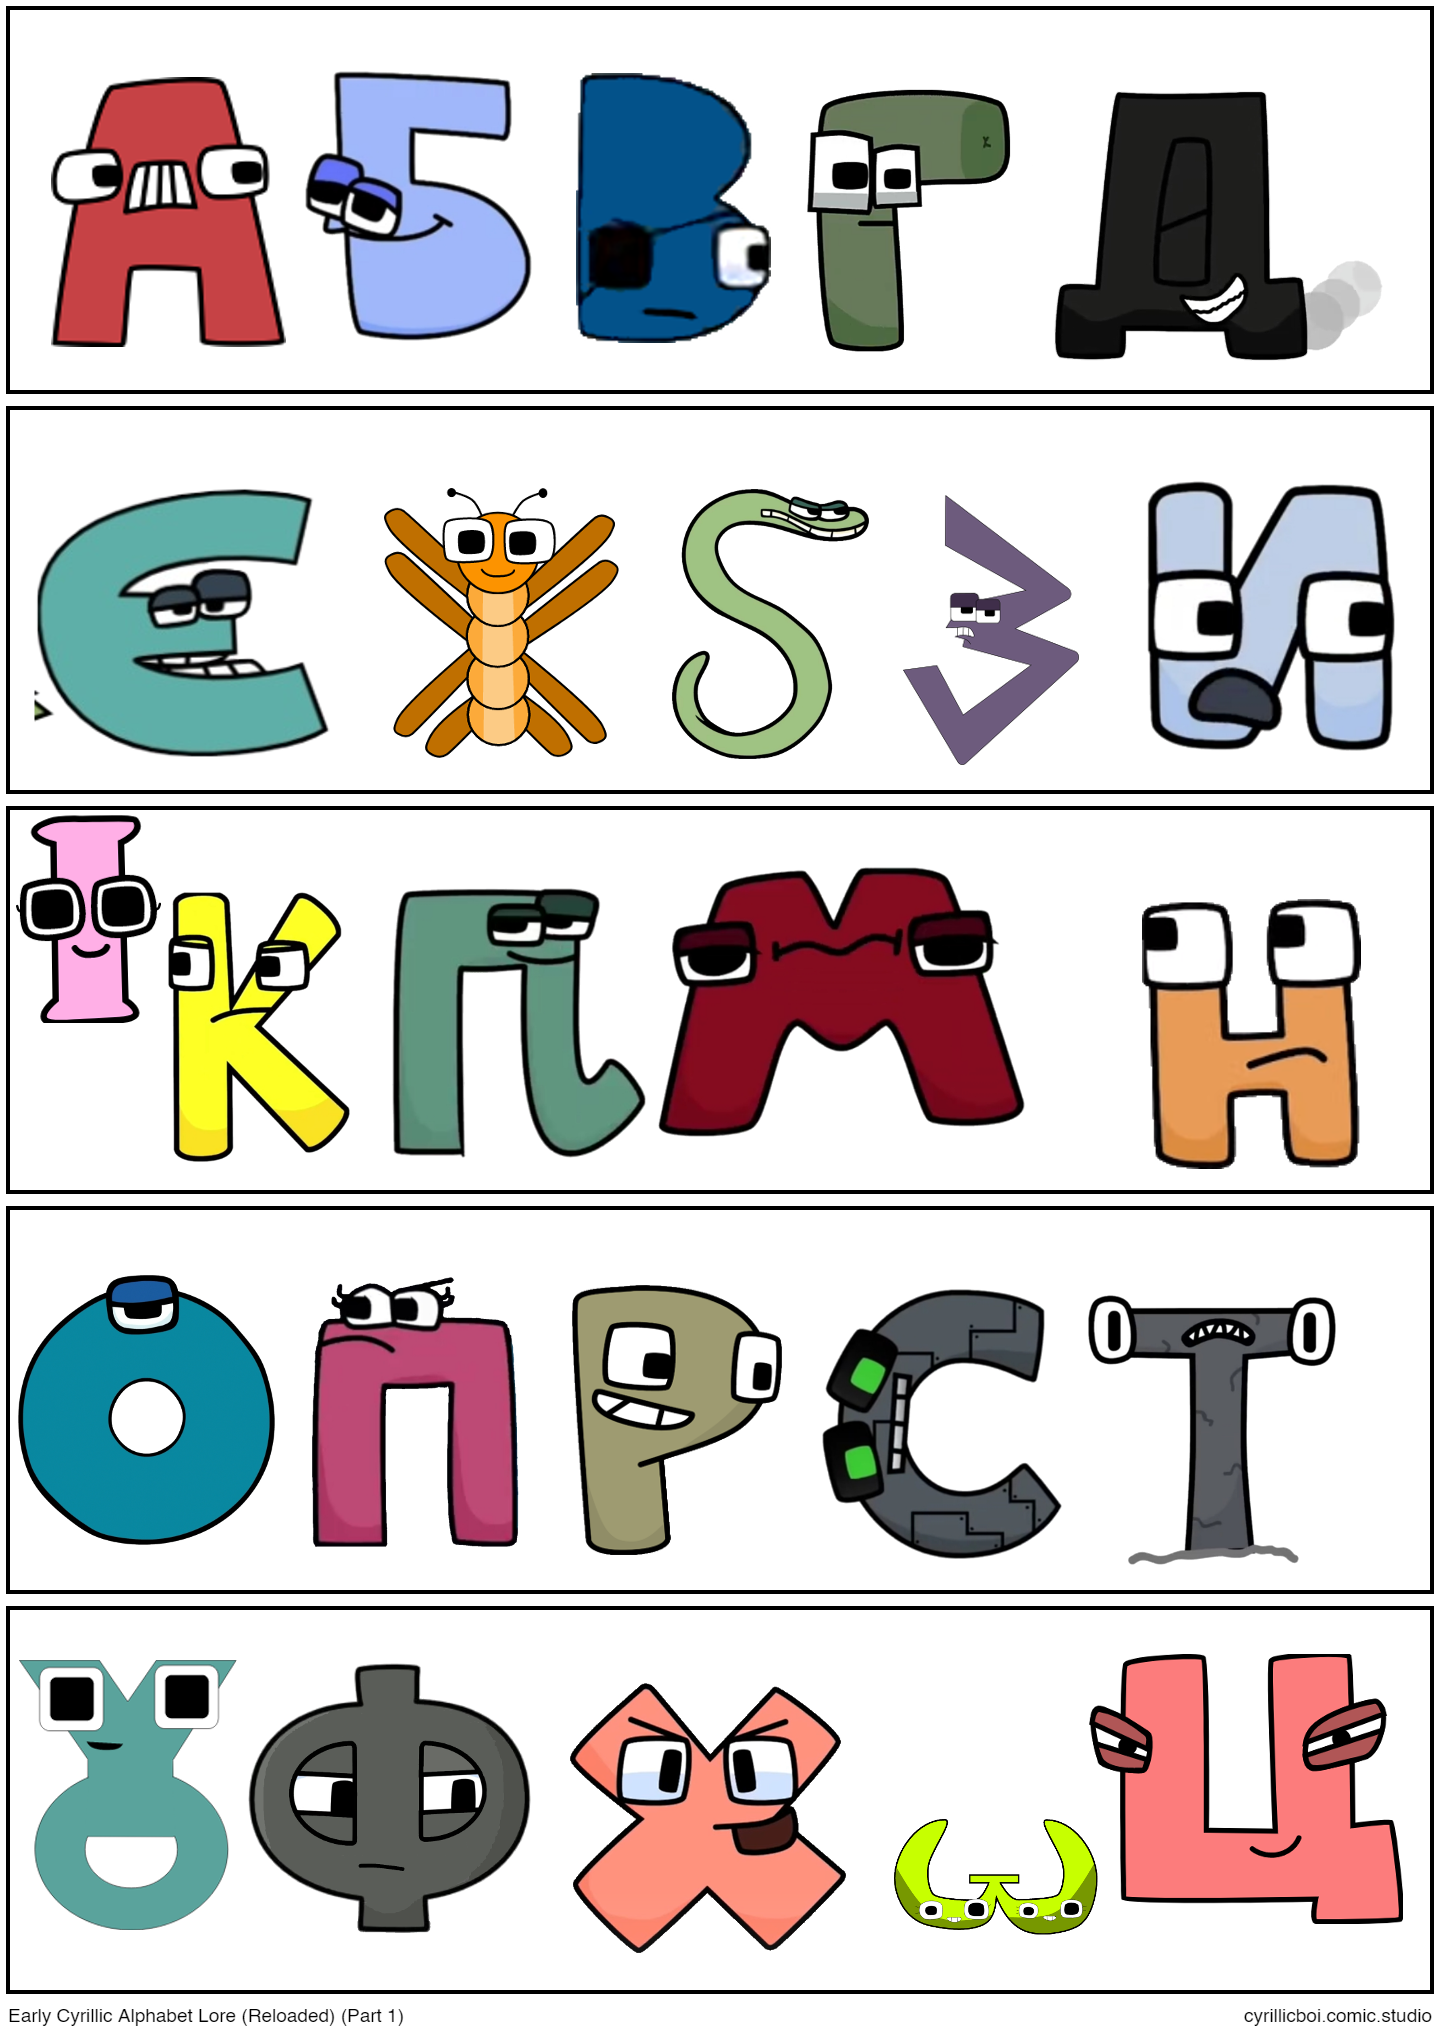 Full Cyrillic Alphabet Lore M.A.P (Open!)